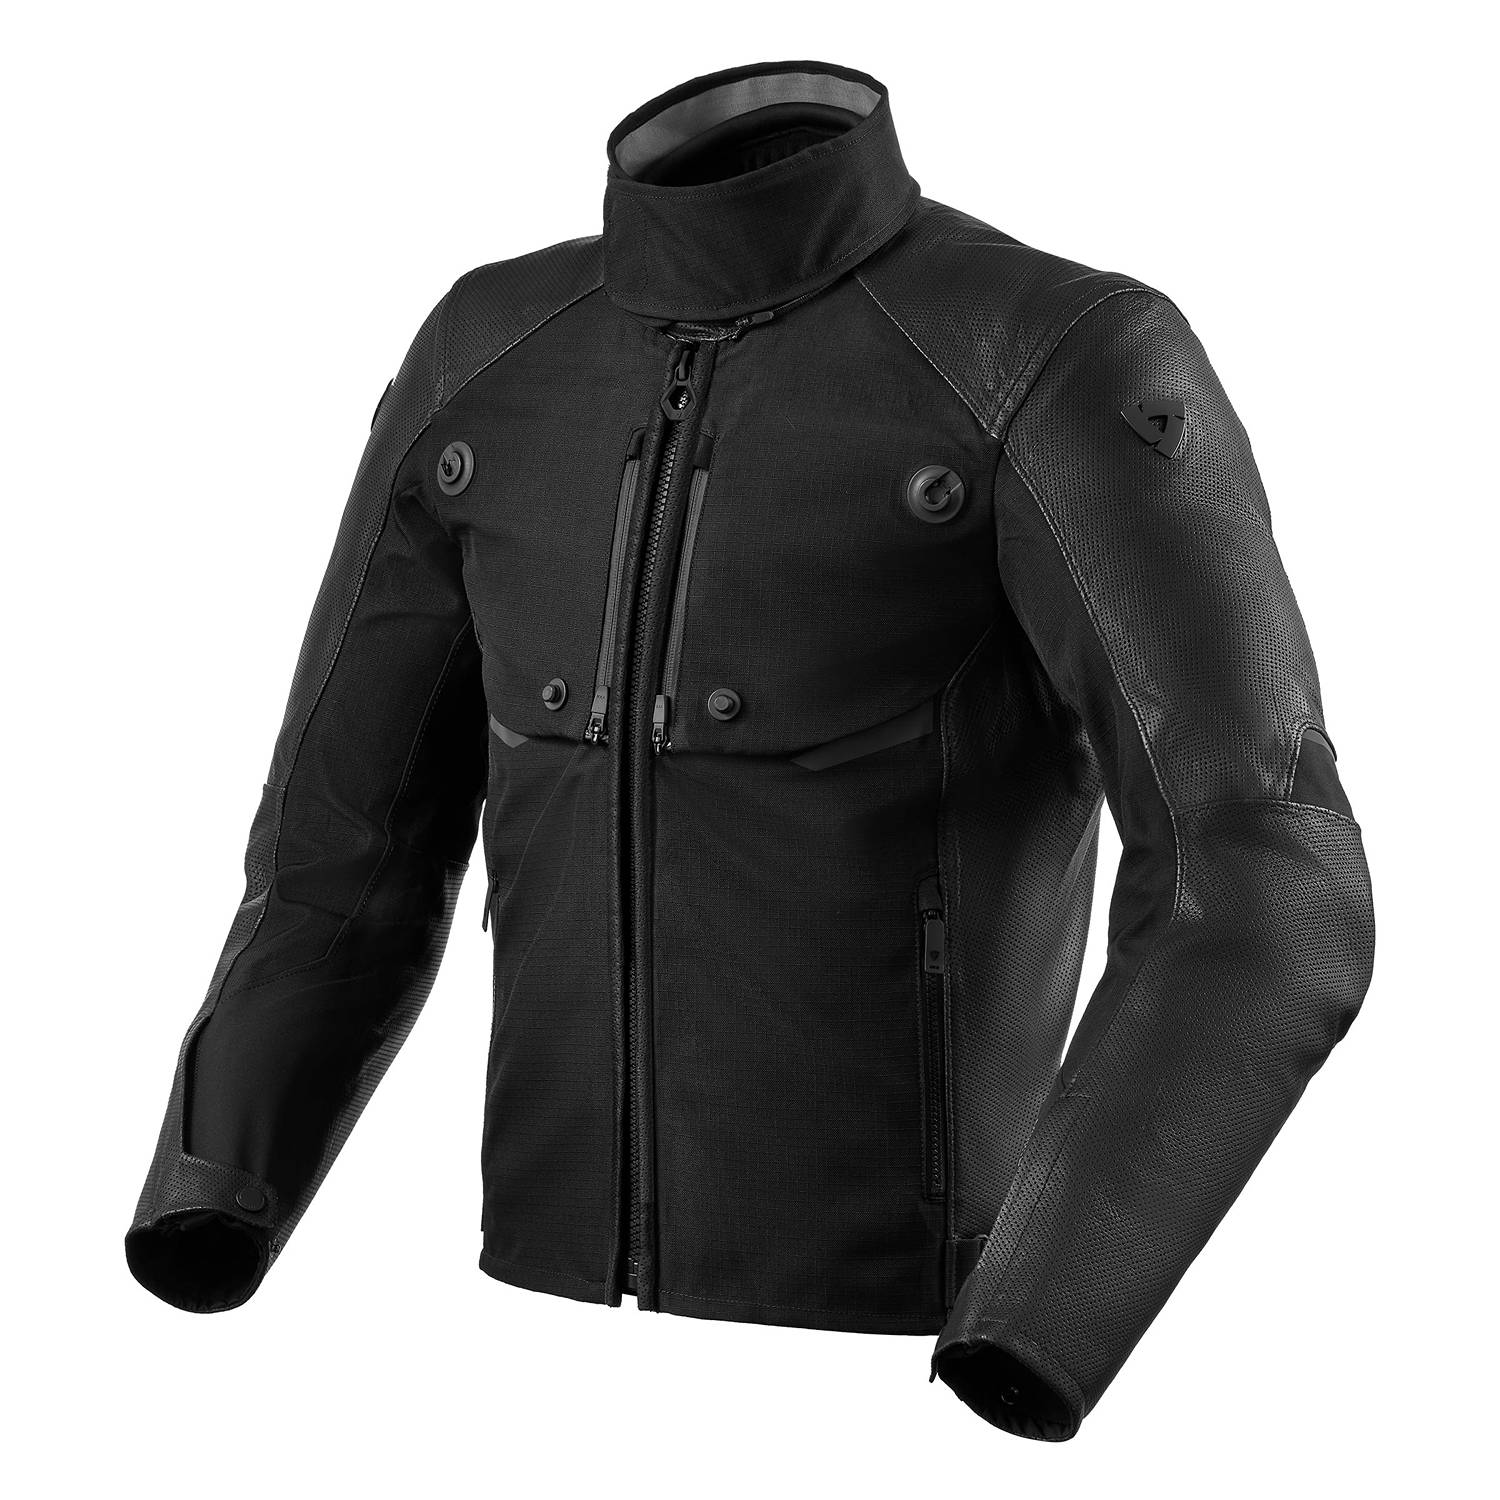 Image of REV'IT! Valve H2O Jacket Black Size 46 ID 8700001310642